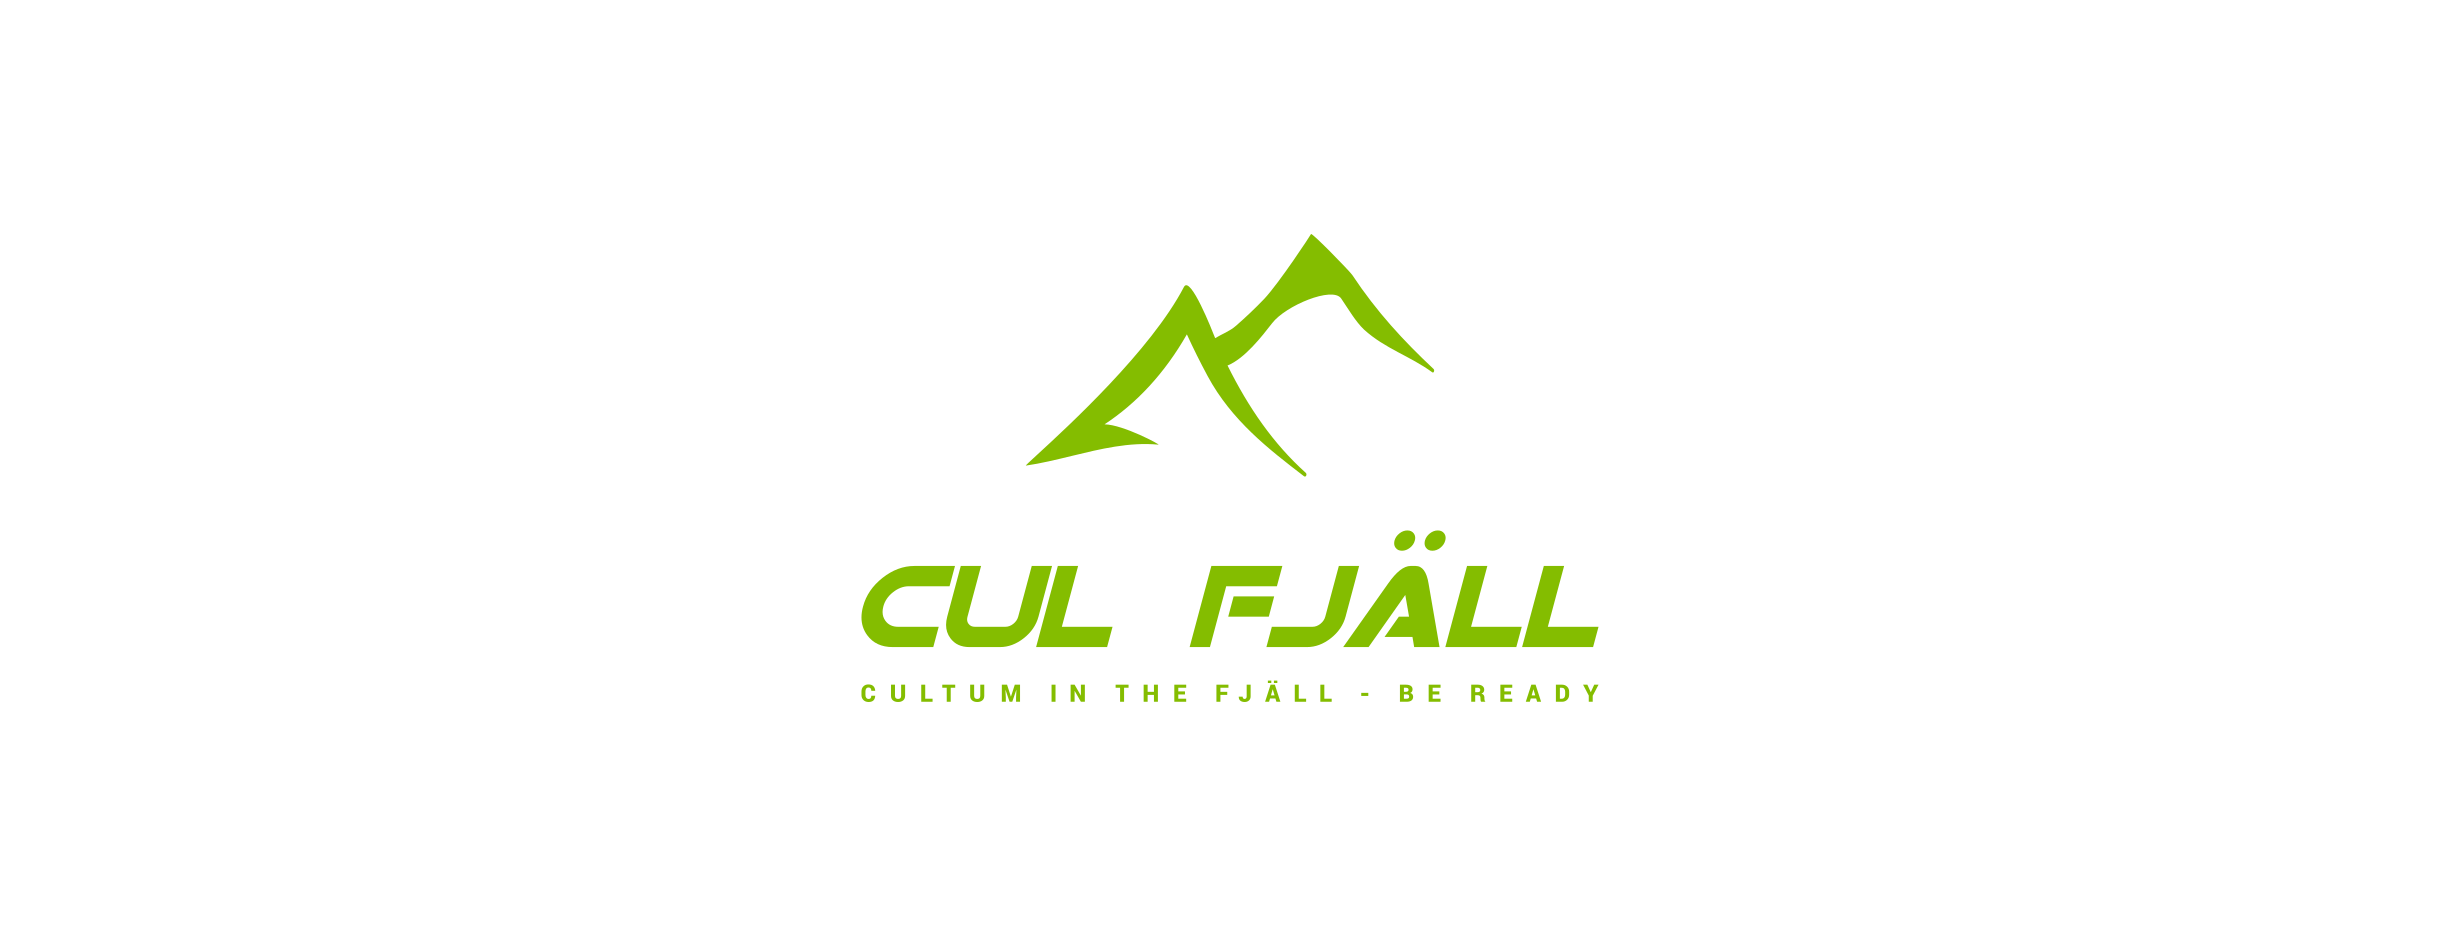 CulFjäll – Looking for Adventures? ►